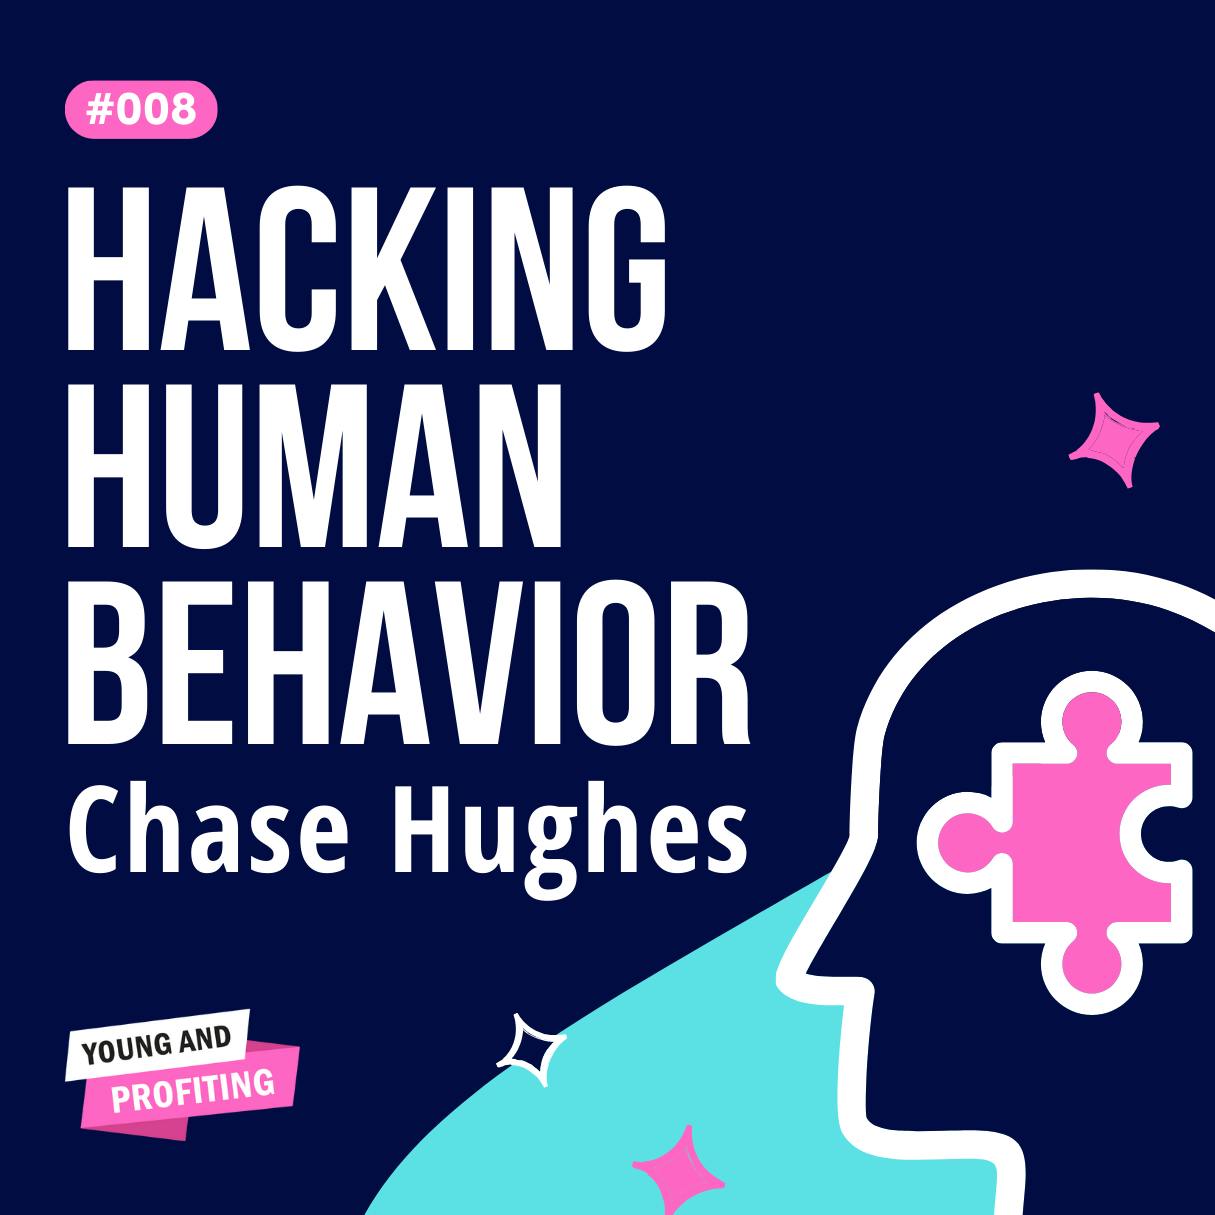 YAPClassic: Chase Hughes on Hacking Human Behavior, The Secrets to Gaining Influence by Hala Taha | YAP Media Network